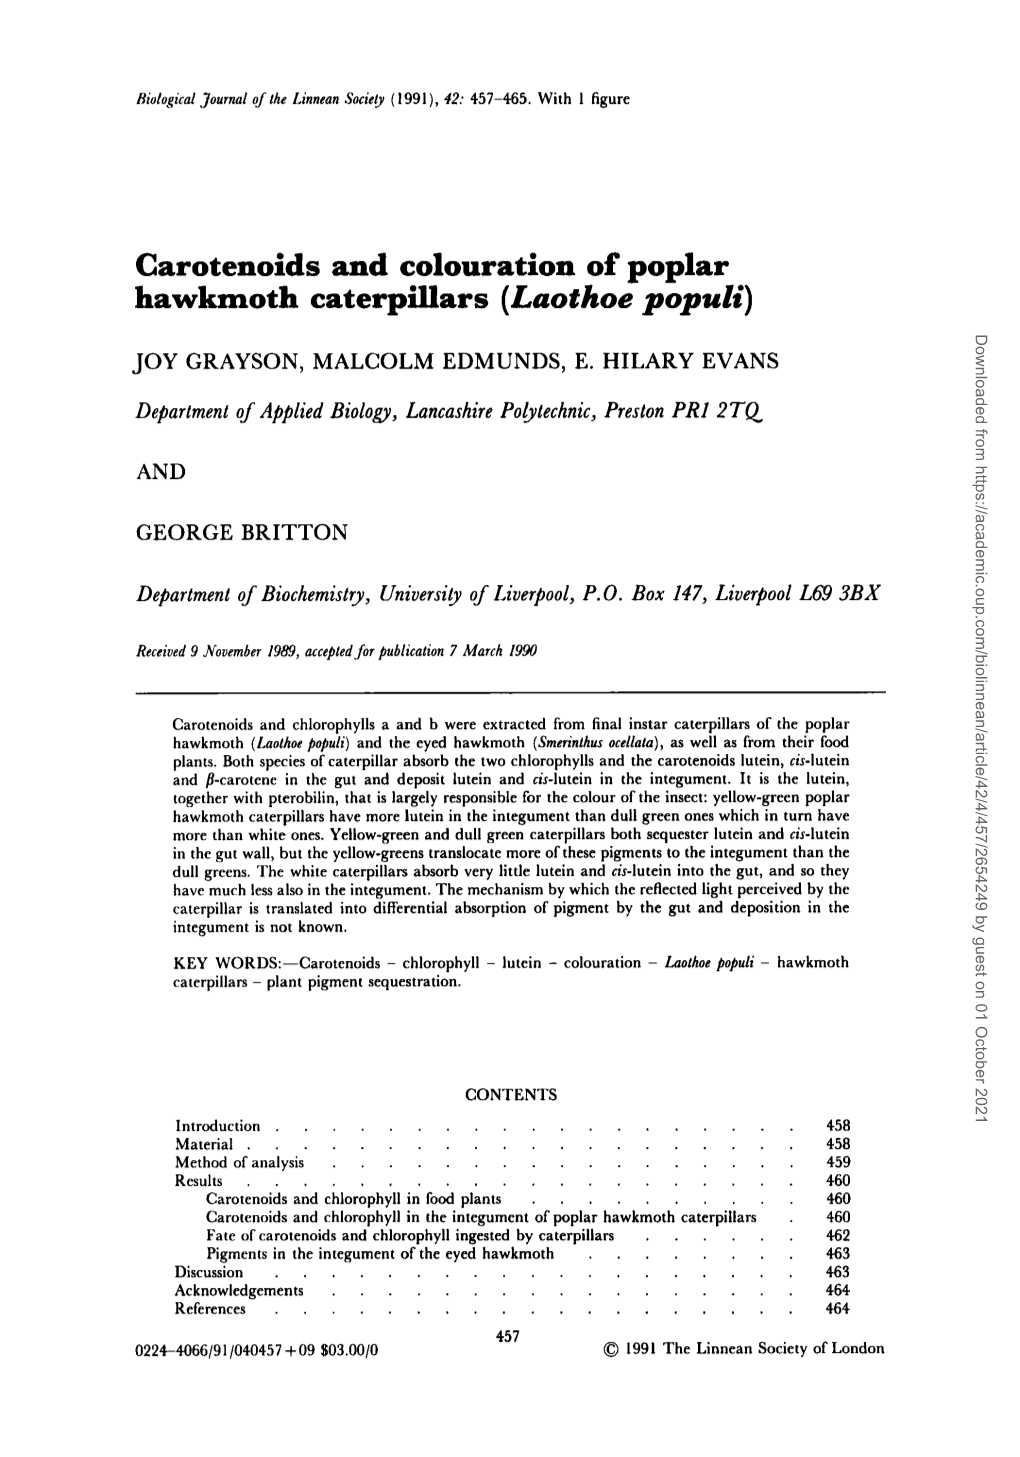 Carotenoids and Colouration of Poplar Hawkmoth Caterpillars (Laothoe